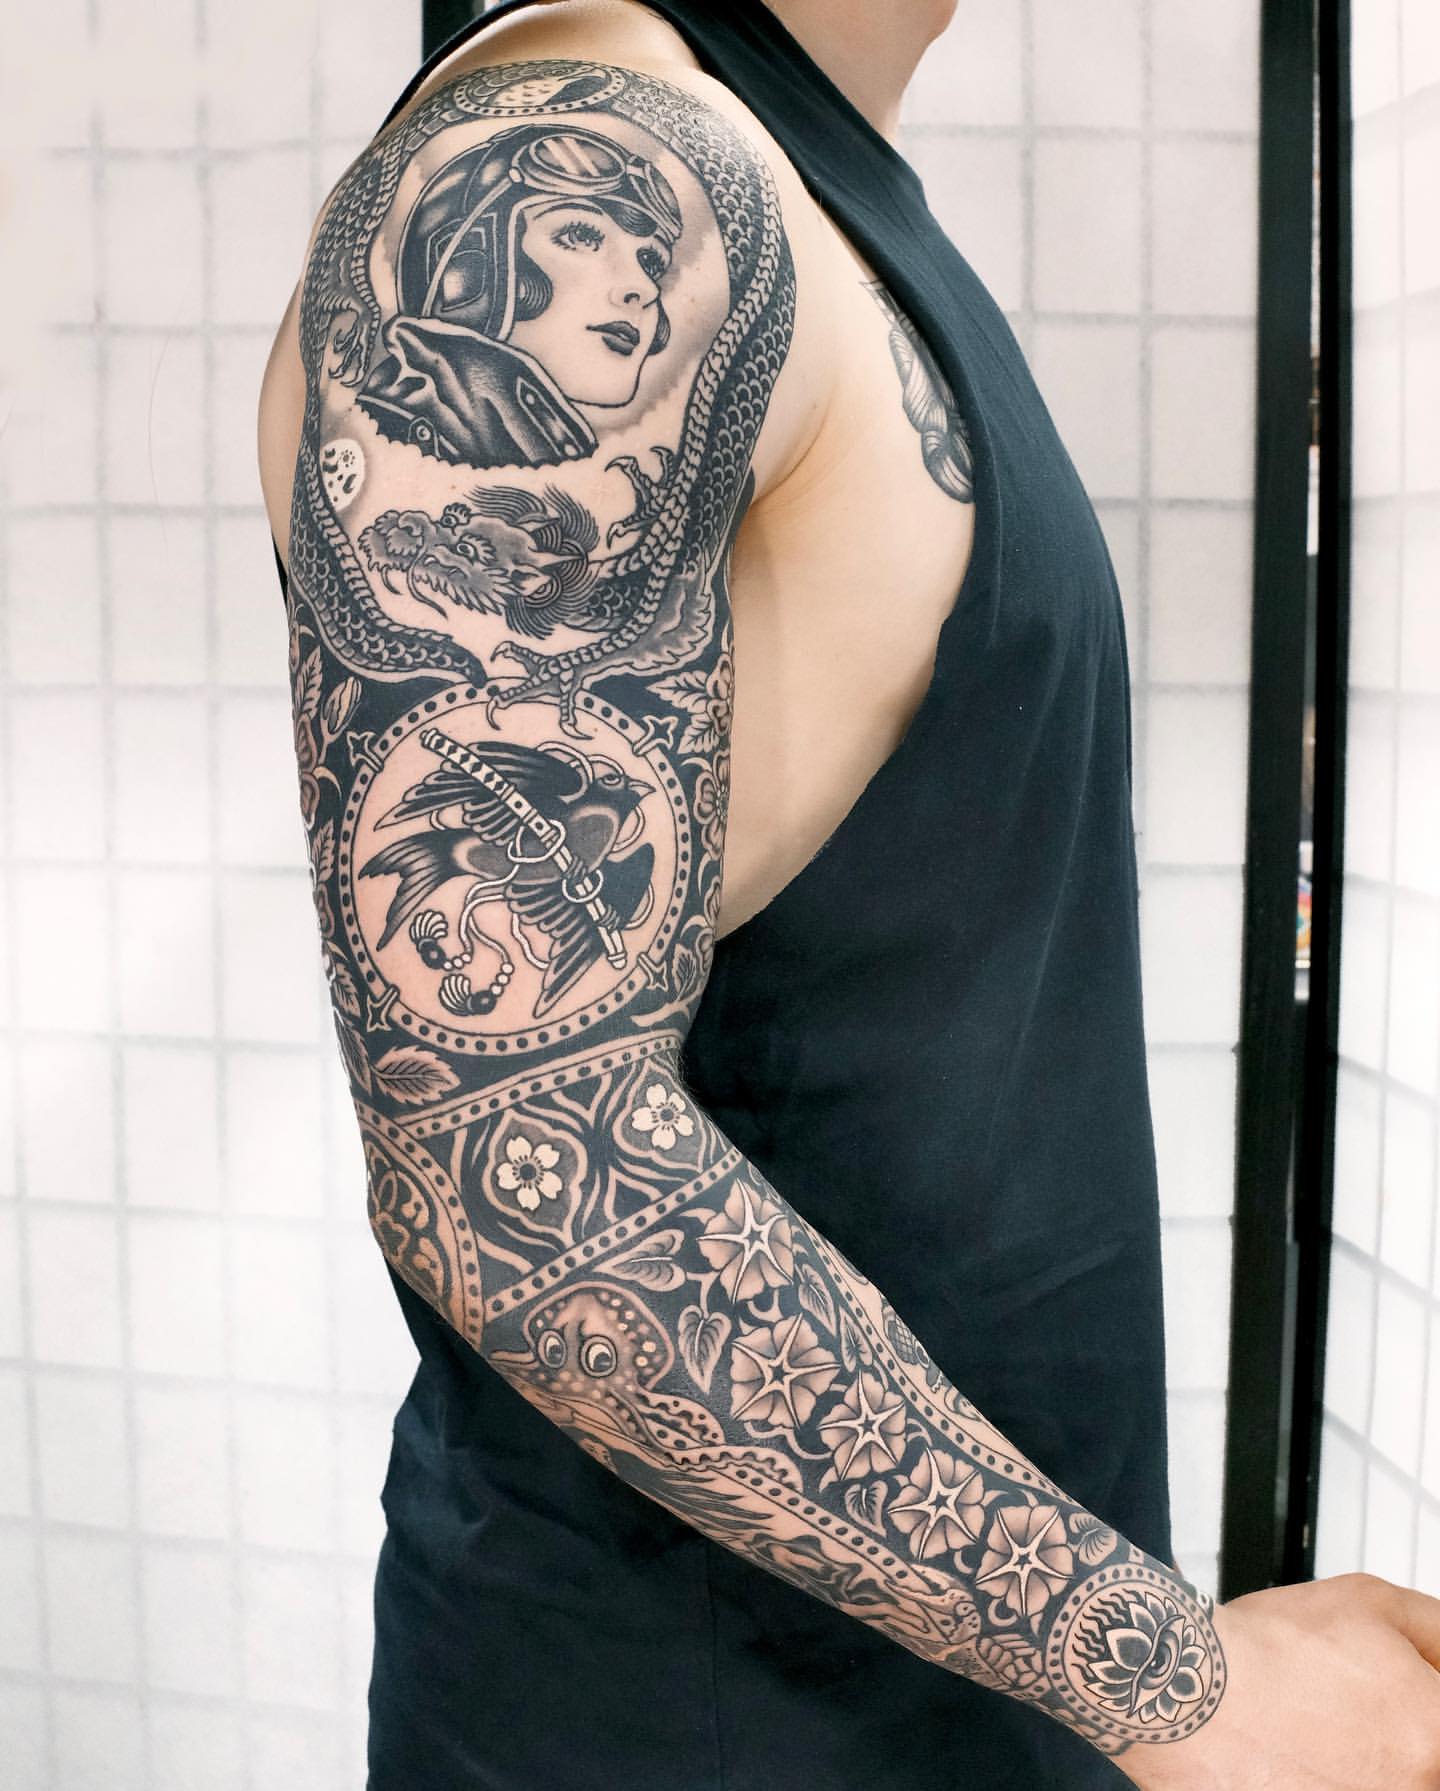 Amazon.com : GLARYYEARS Maori Temporary Tattoo for Men Adults, 46-Pack  Large Small size Realistic Tattoos, Totem Tribal Tiki Turtle Manta Fake  Tattoo Stickers, Long-lasting Cool Black Body Half Arm Tattoos : Beauty